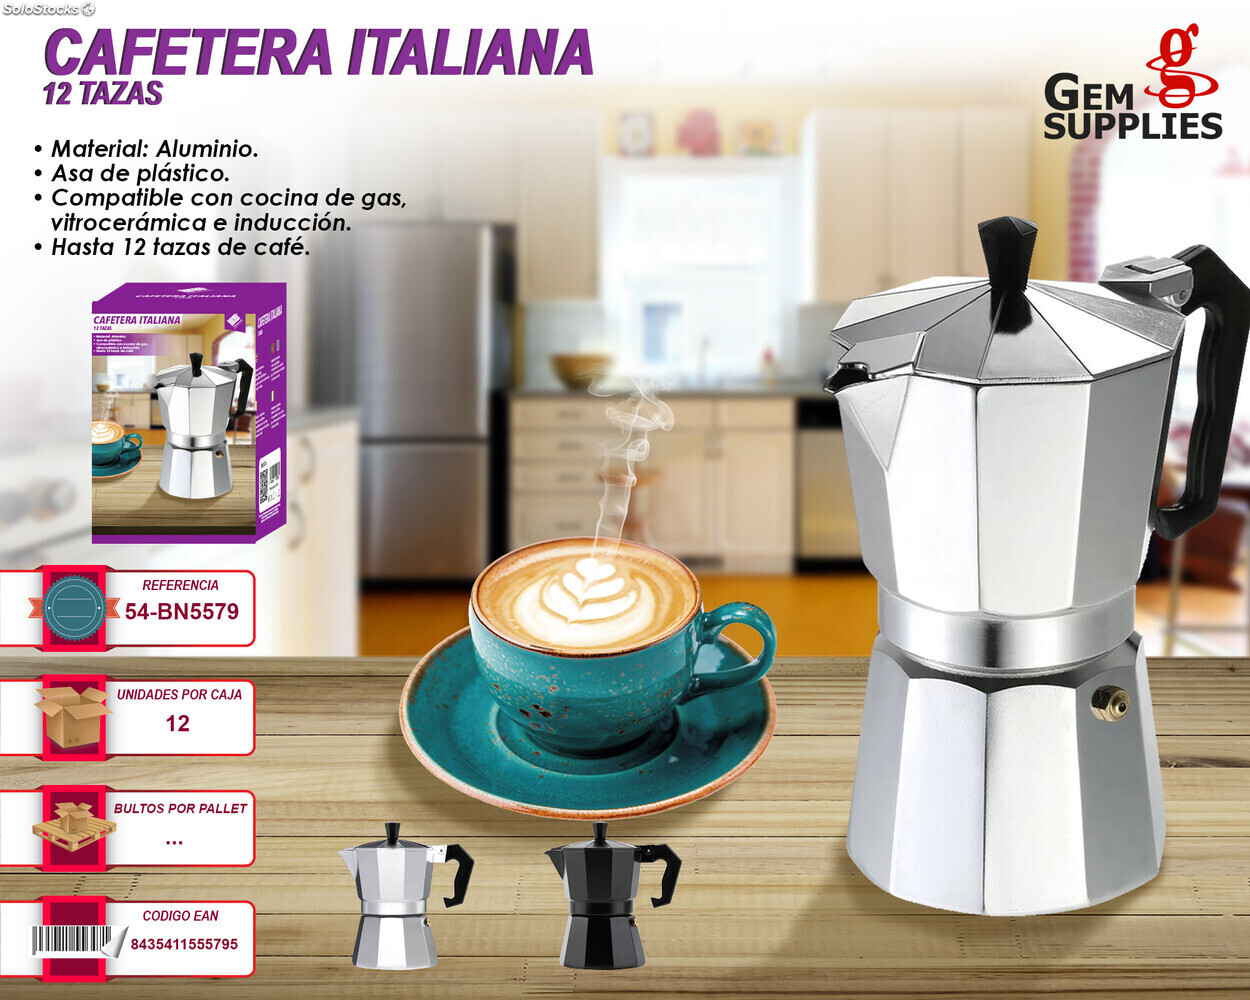 https://images.ssstatic.com/cafetera-italiana-12-tazas-we-houseware-67-710683430.jpg